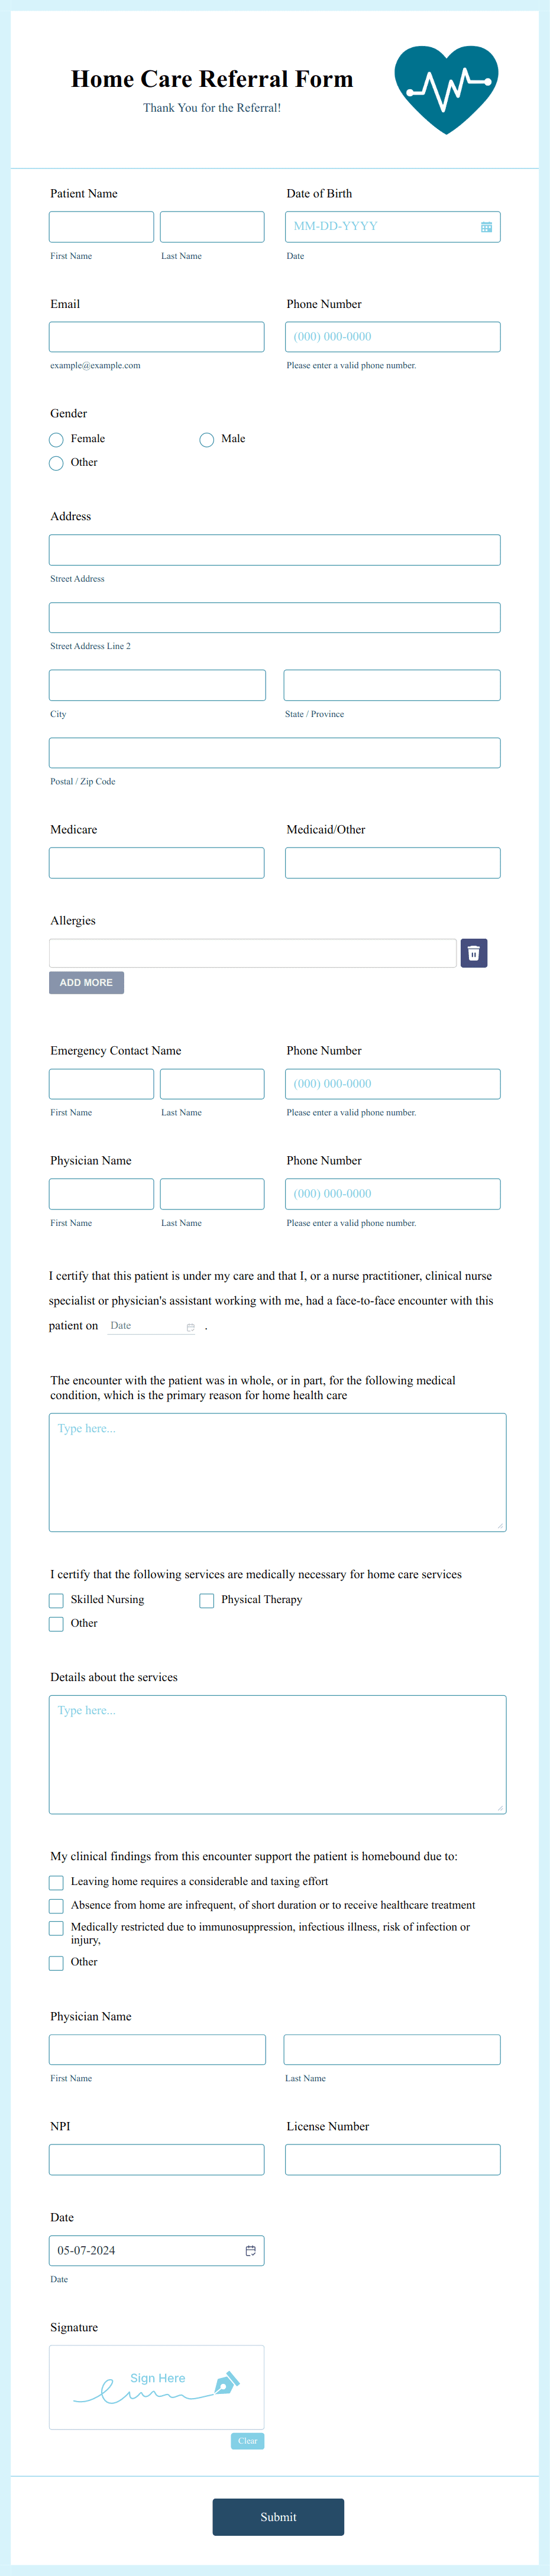 Home Care Referral Form Template Jotform 7454